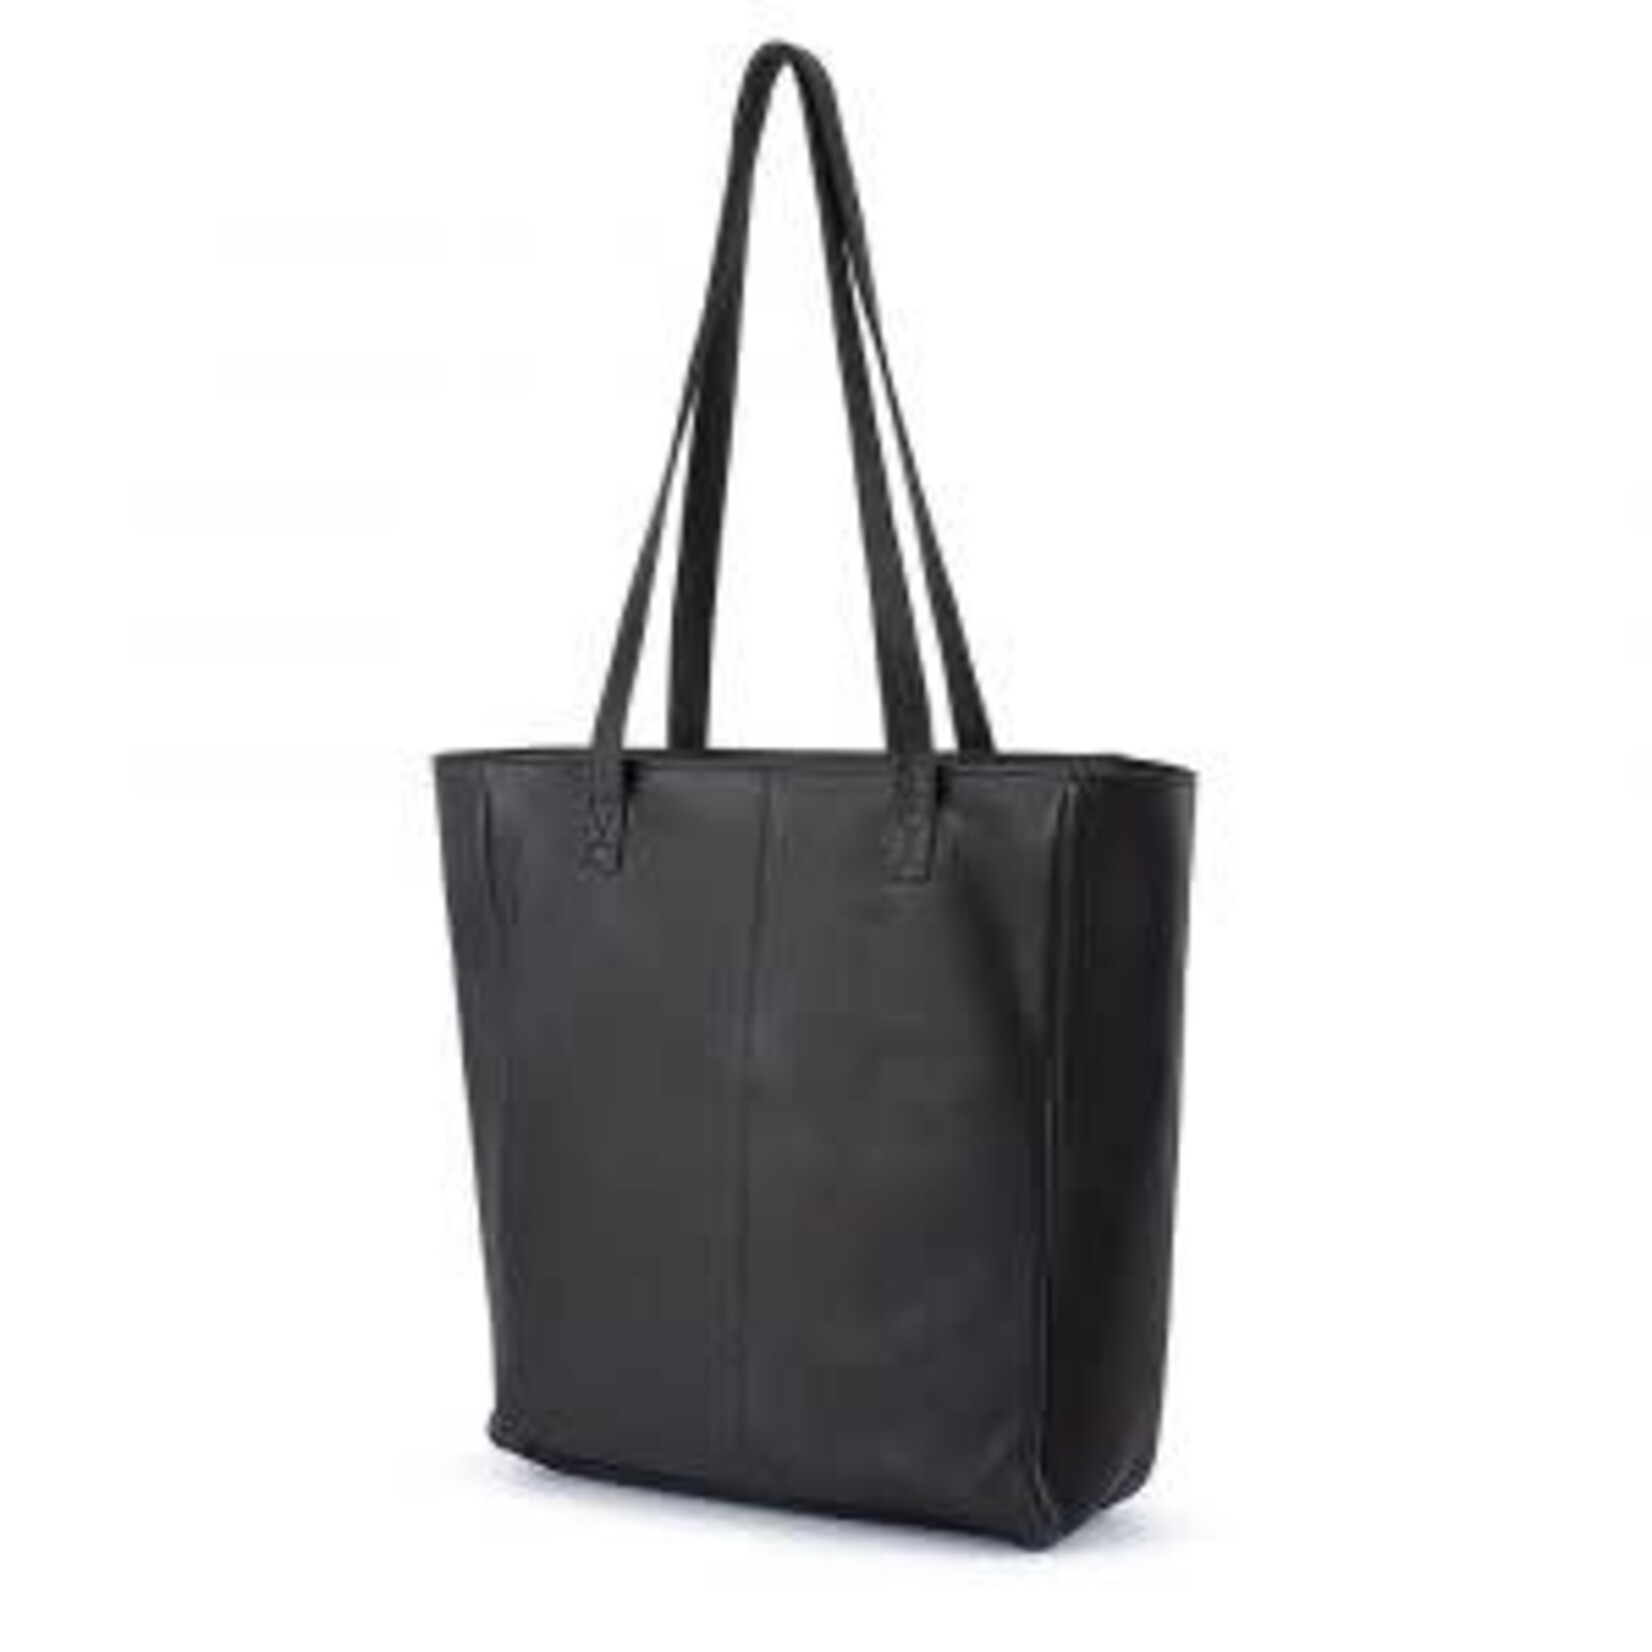 Verona Black Washed Leather Double Strap Handbag